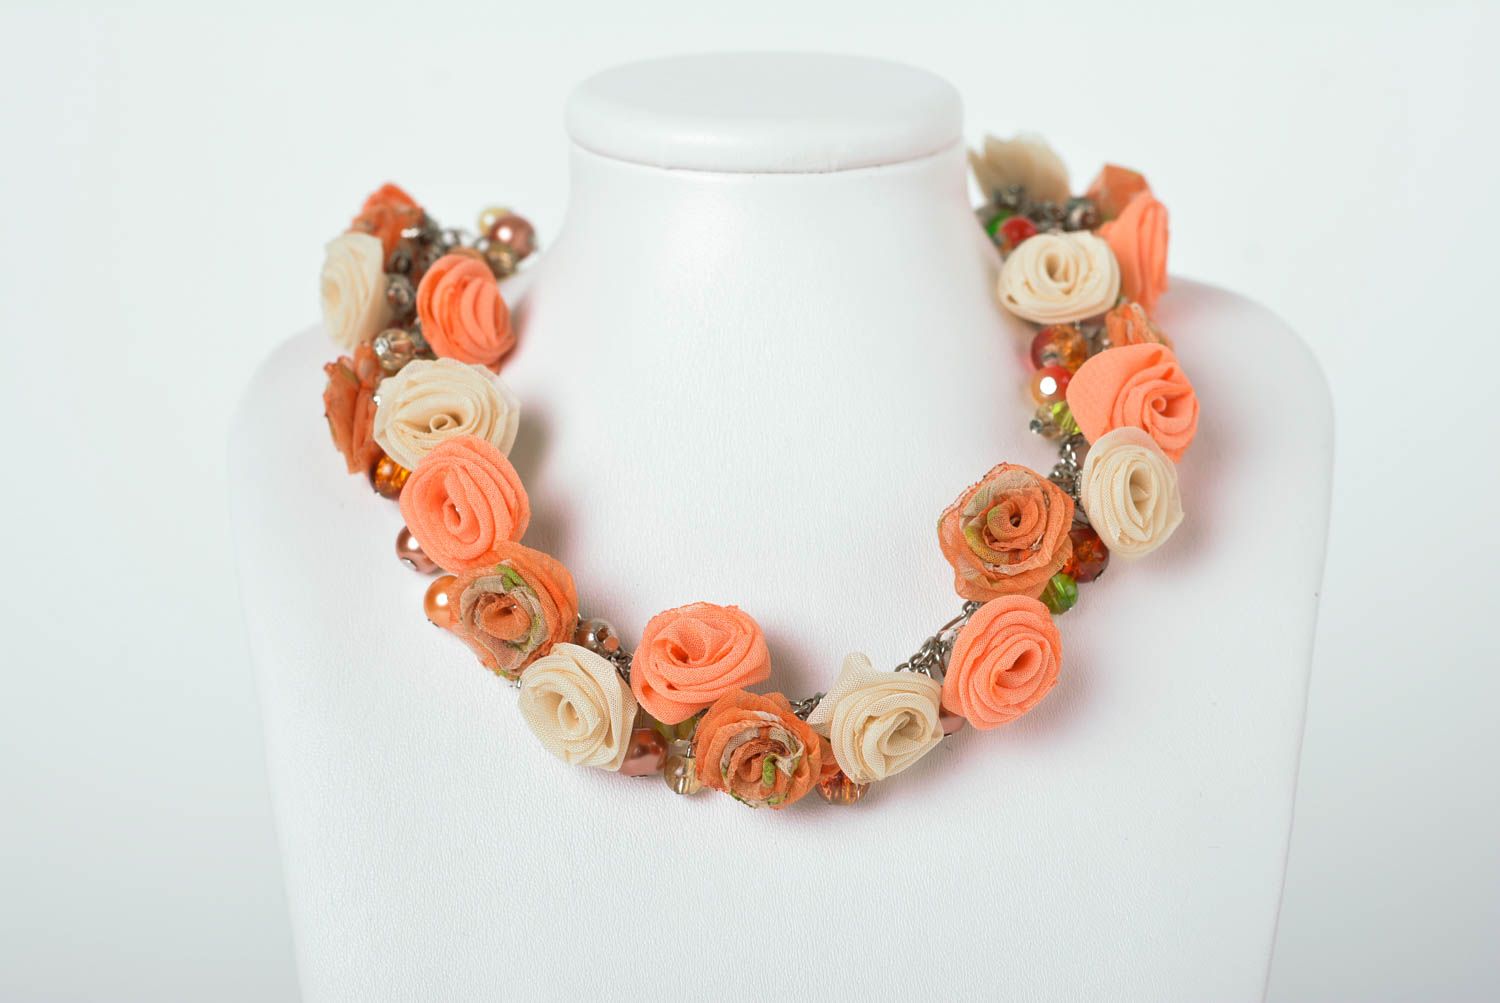 Handmade earrings designer necklace unusual gift ideas for women jewelry set photo 4